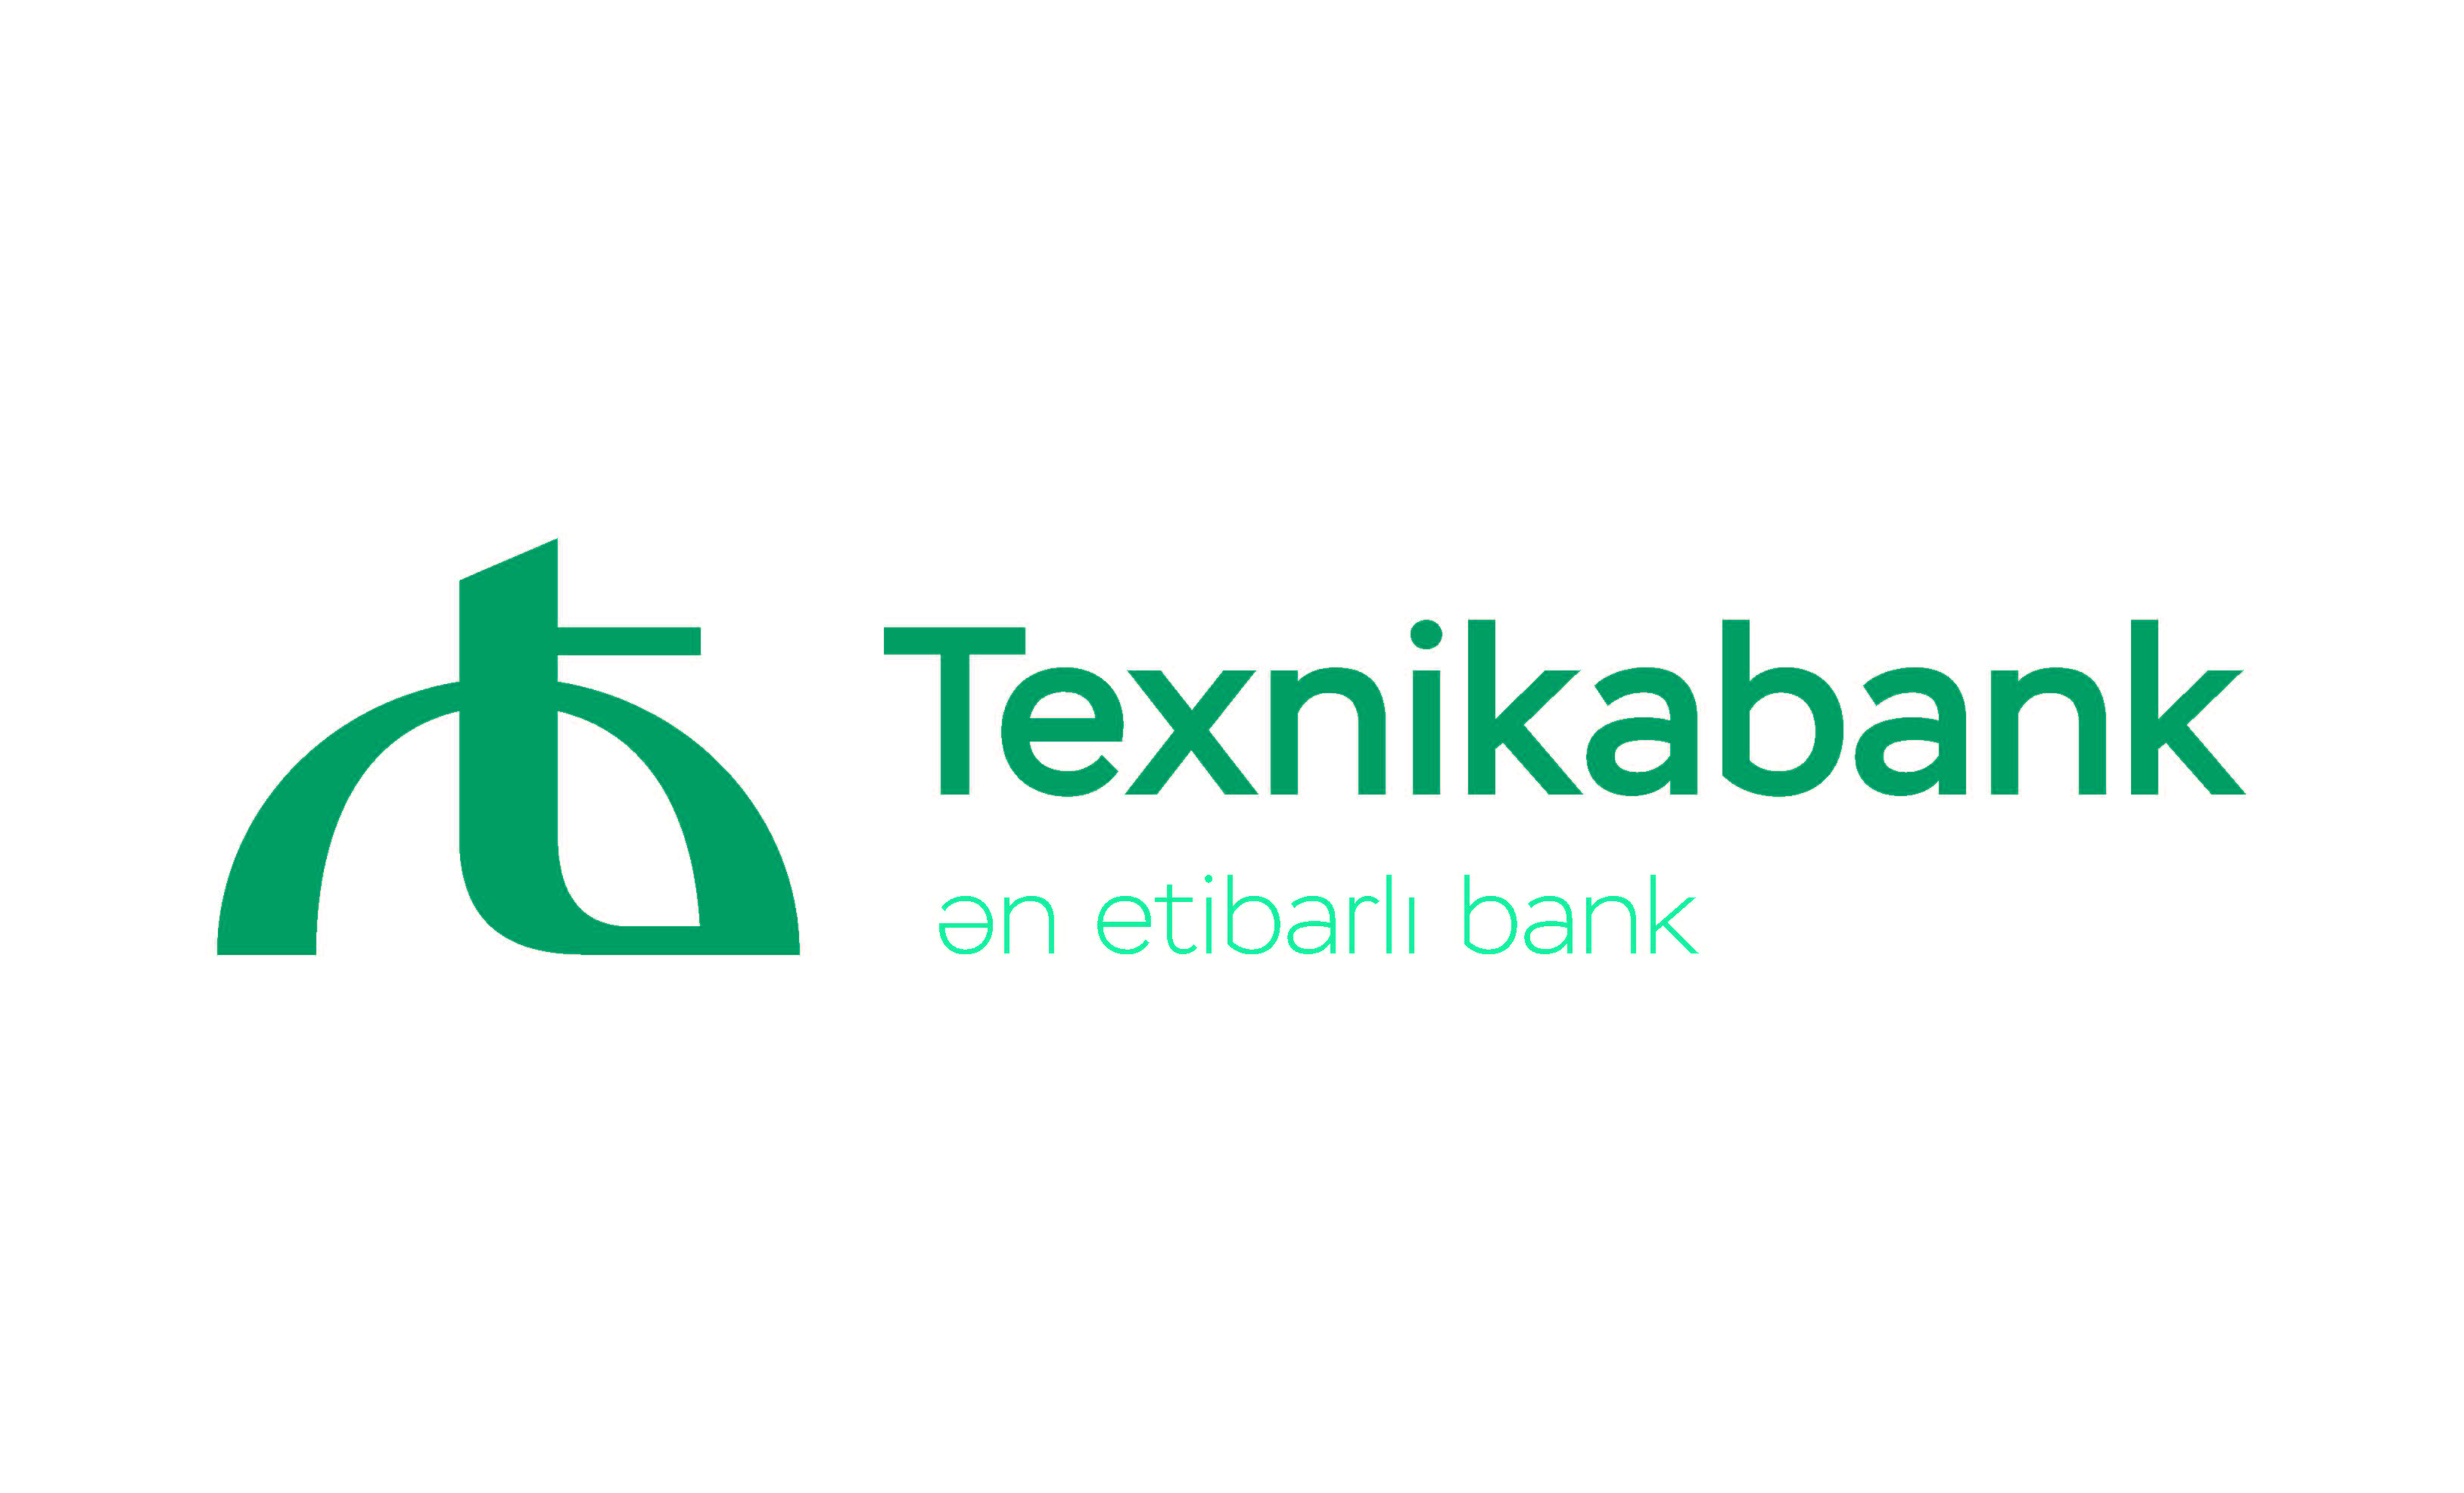 “Texnikabank” утвердил новый логотип и слоган